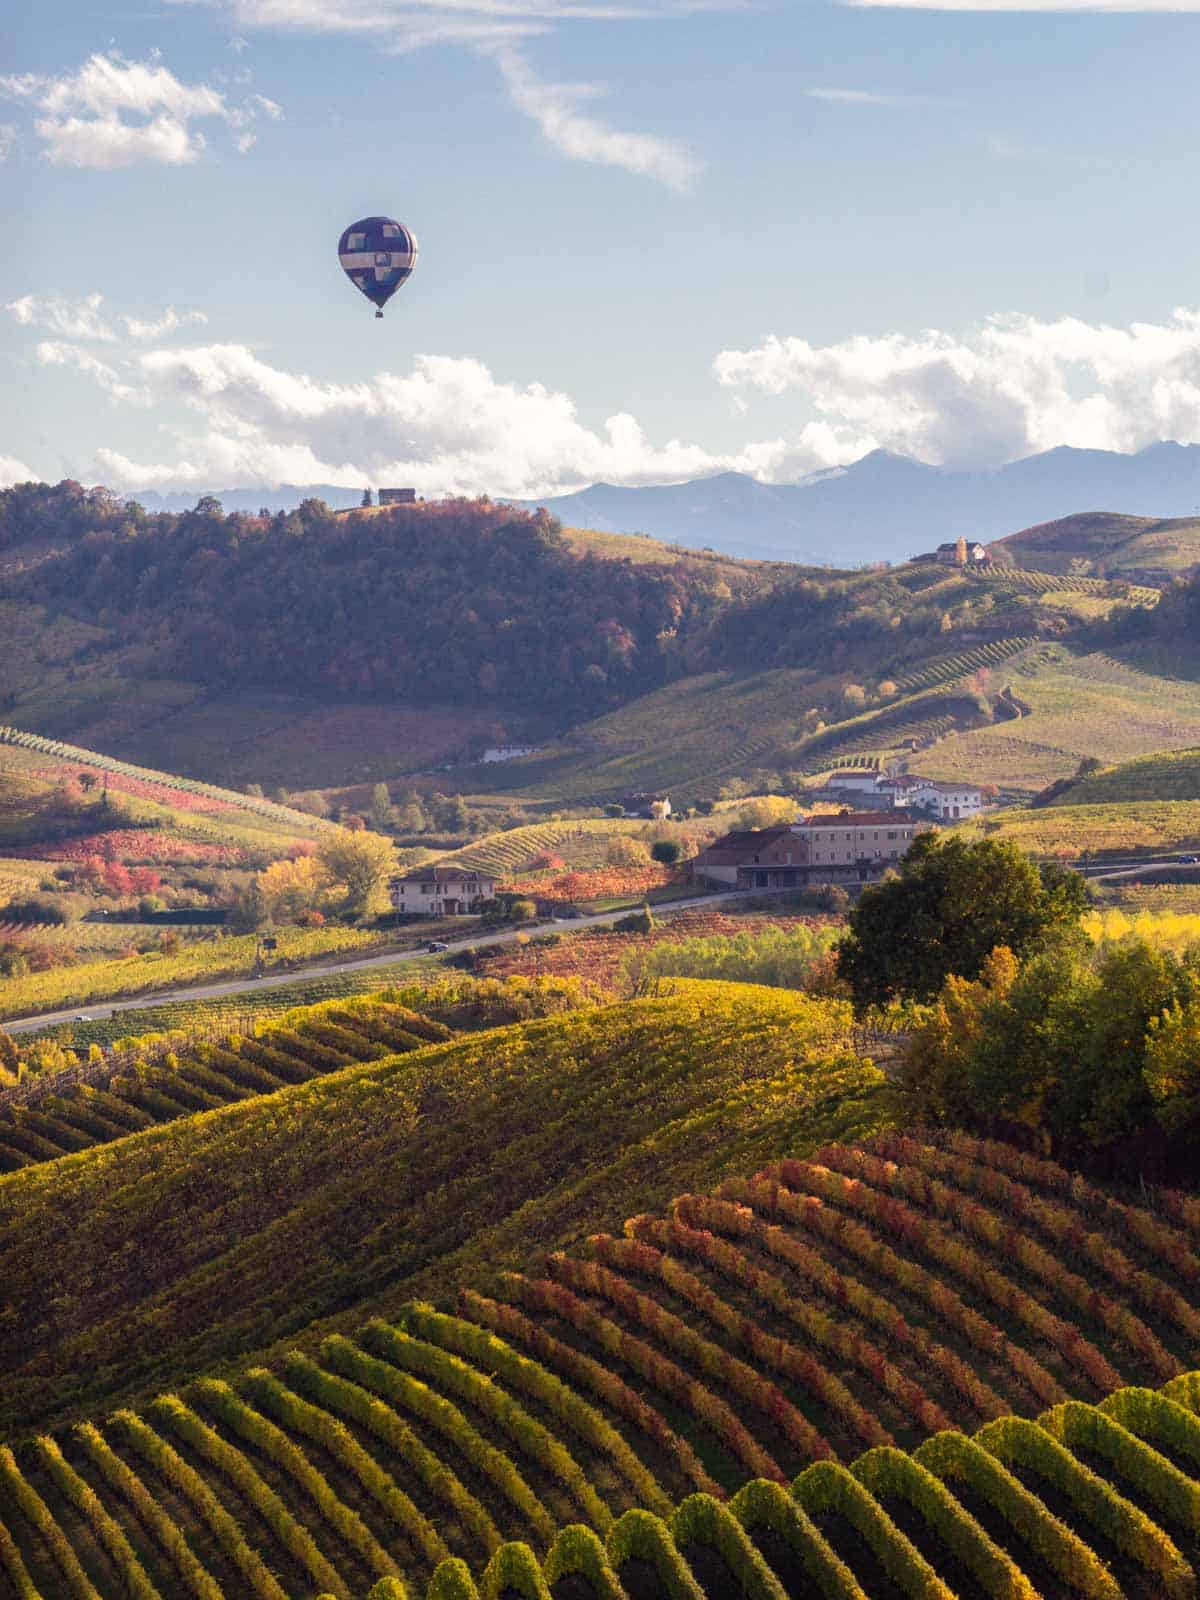 air ballons barolo piedmont region italy